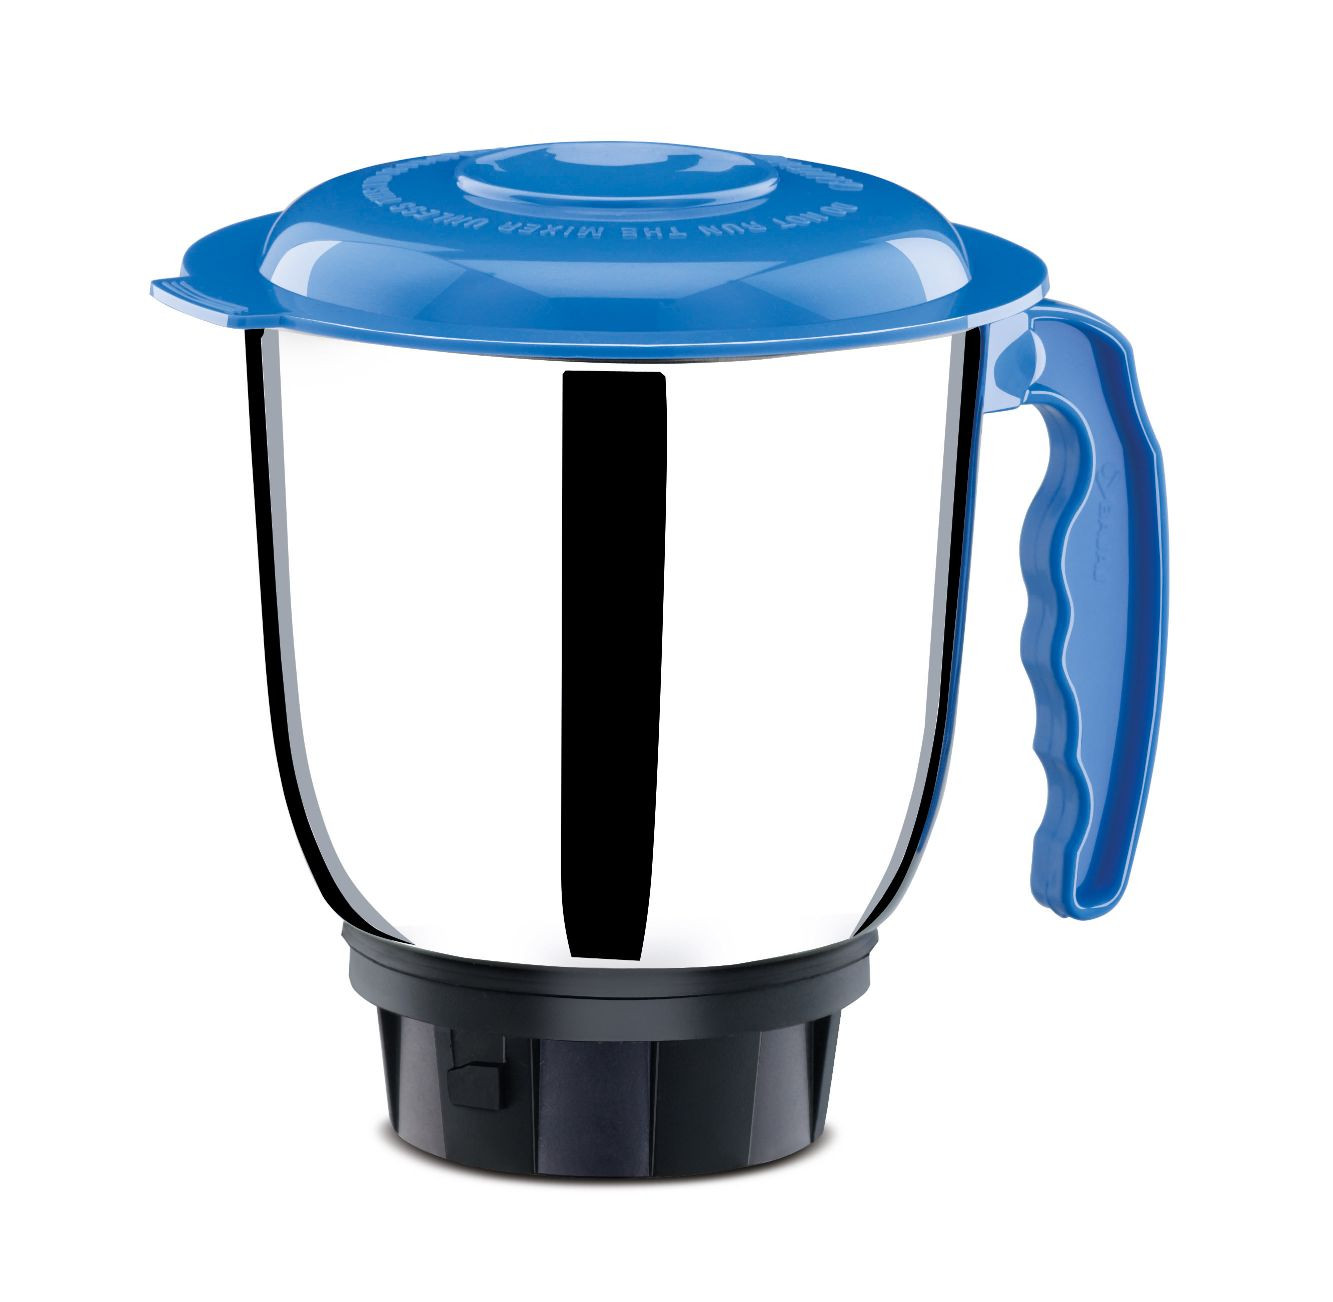 bajaj-bravo-dlx-indian-mixer-grinder-500w-stainless-steel-jars-indian-mixer-grinder-spice-coffee-grinder-110v-for-use-in-canada-usa10